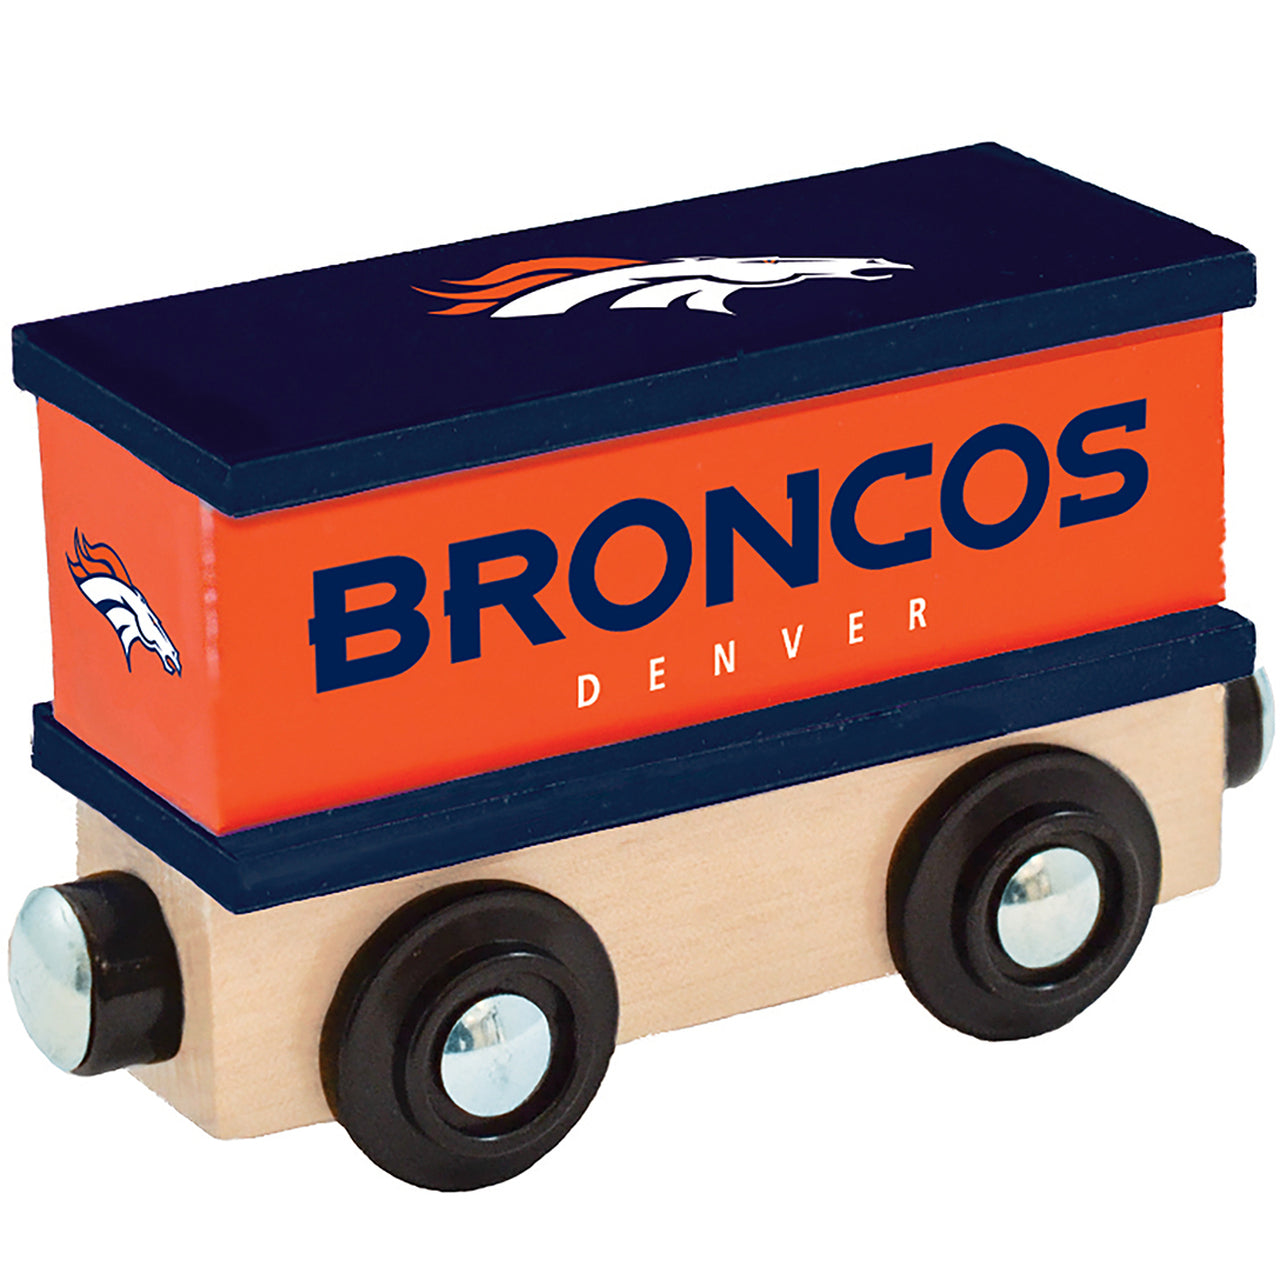 Denver Broncos Box Car Wooden Toy Train by Masterpieces